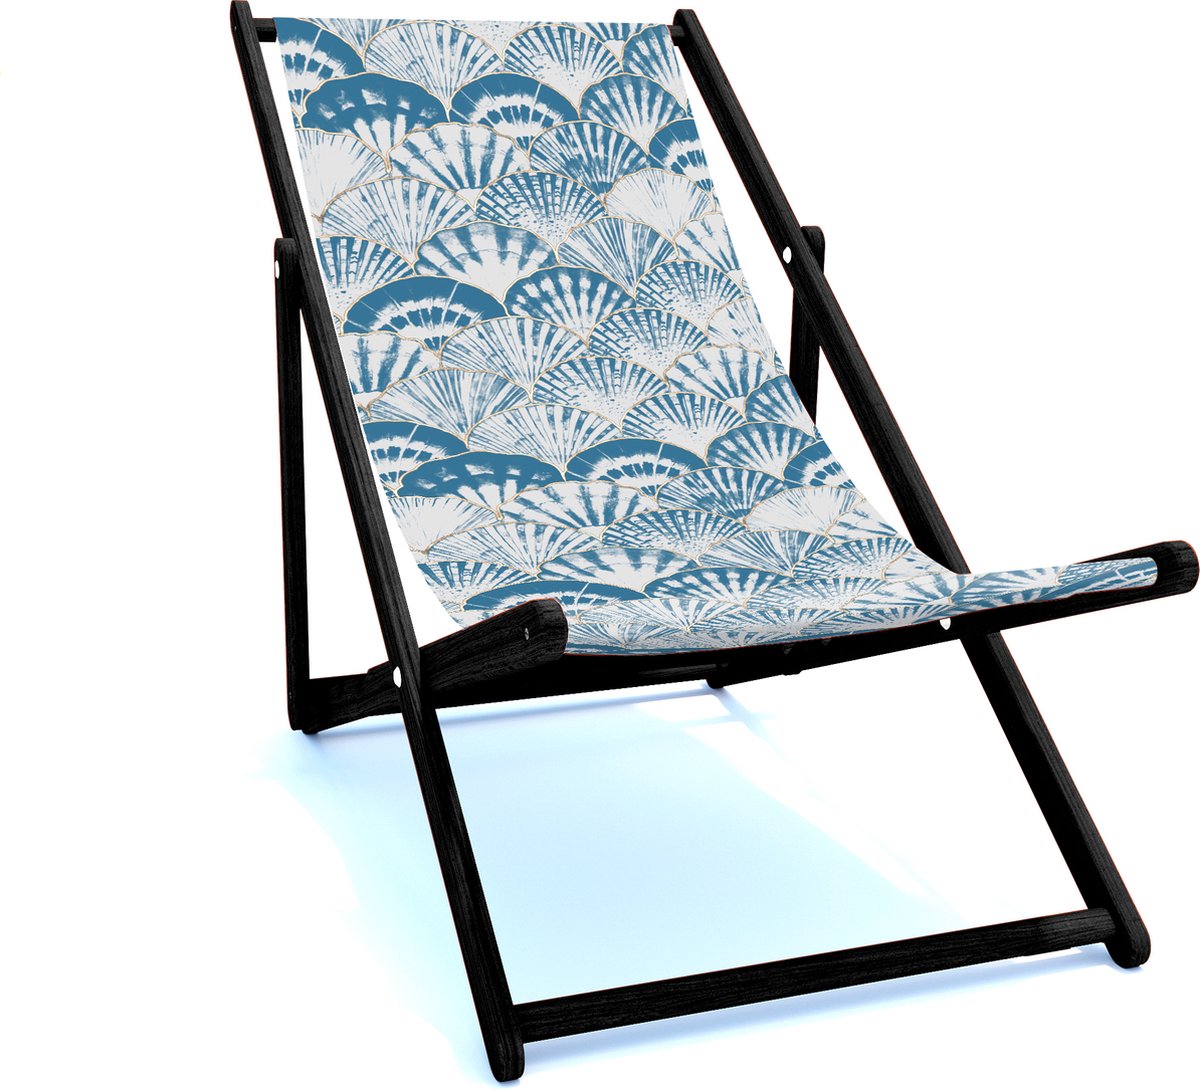 Holtaz Strandstoel Hout Inklapbaar Comfortabele Zonnebed Ligbed met verstelbare Lighoogte met stoffen Oceaan zwart houten frame